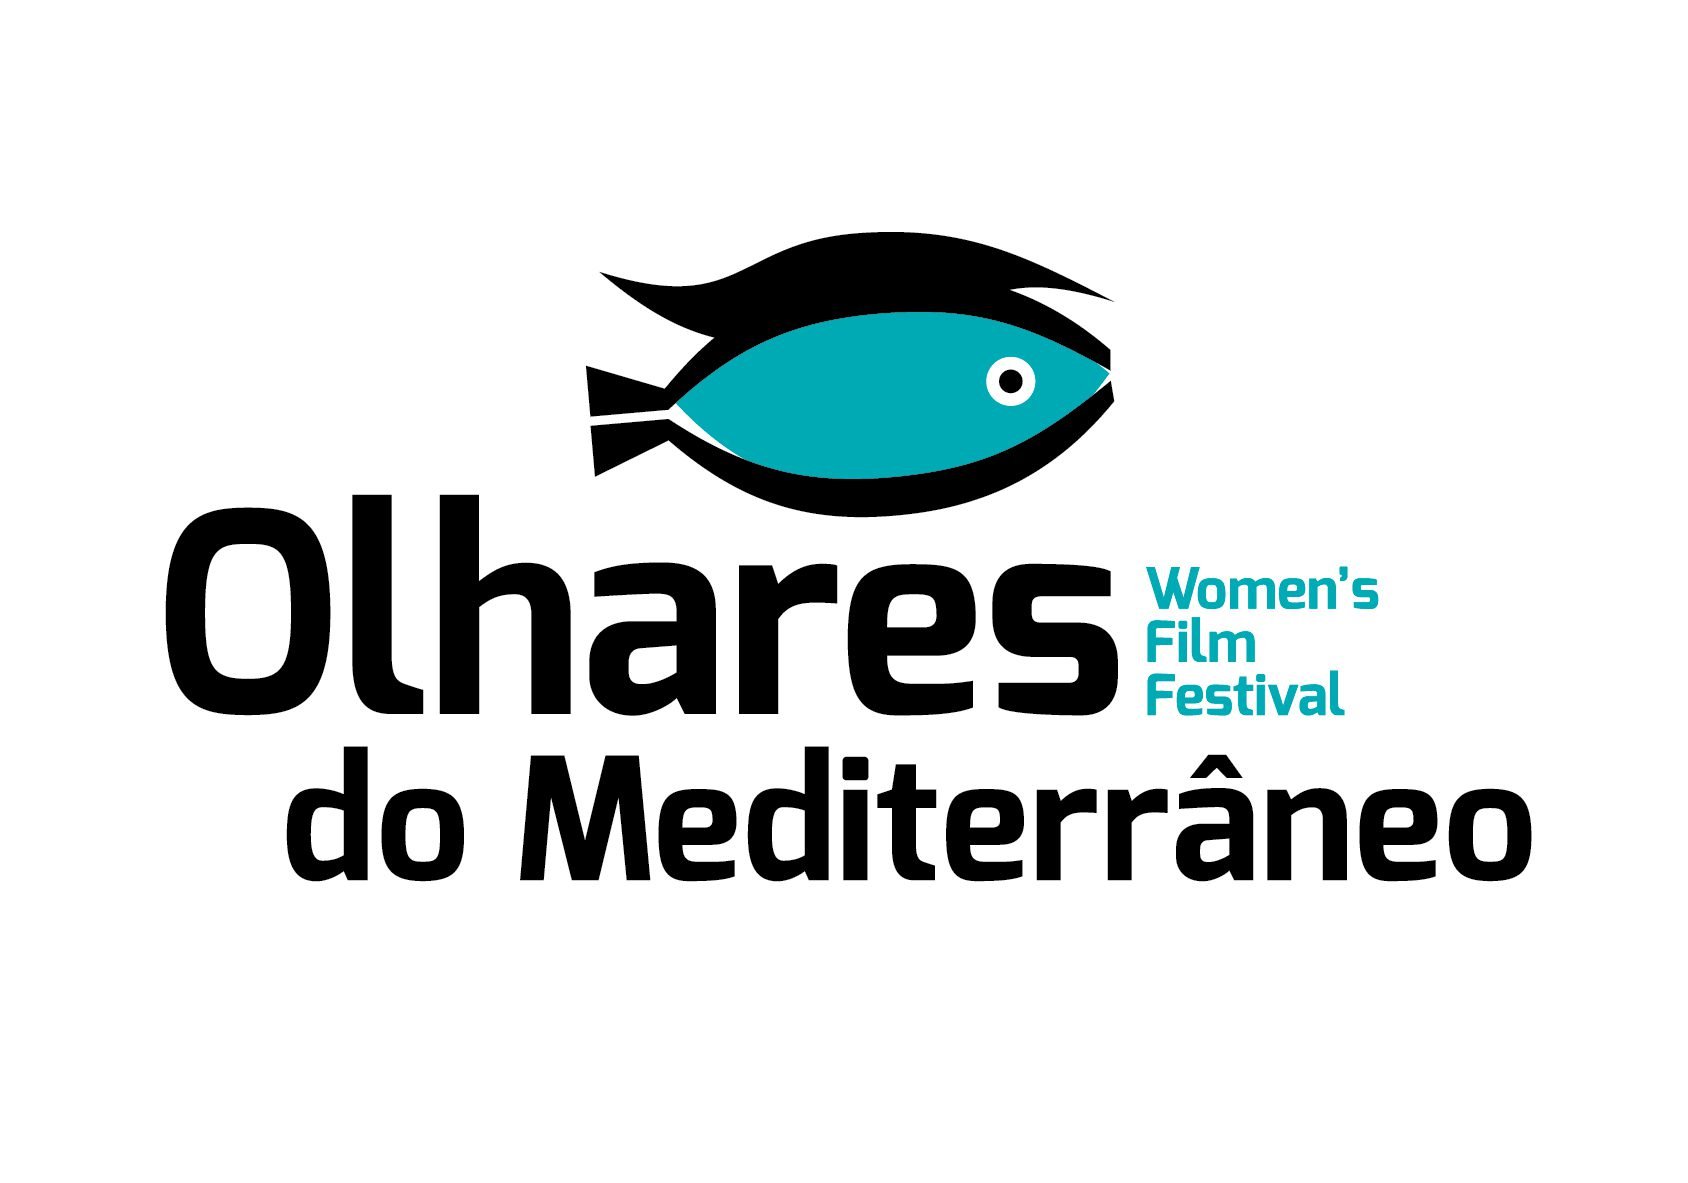 Olhares do Mediterrâneo - Women's Film Festival